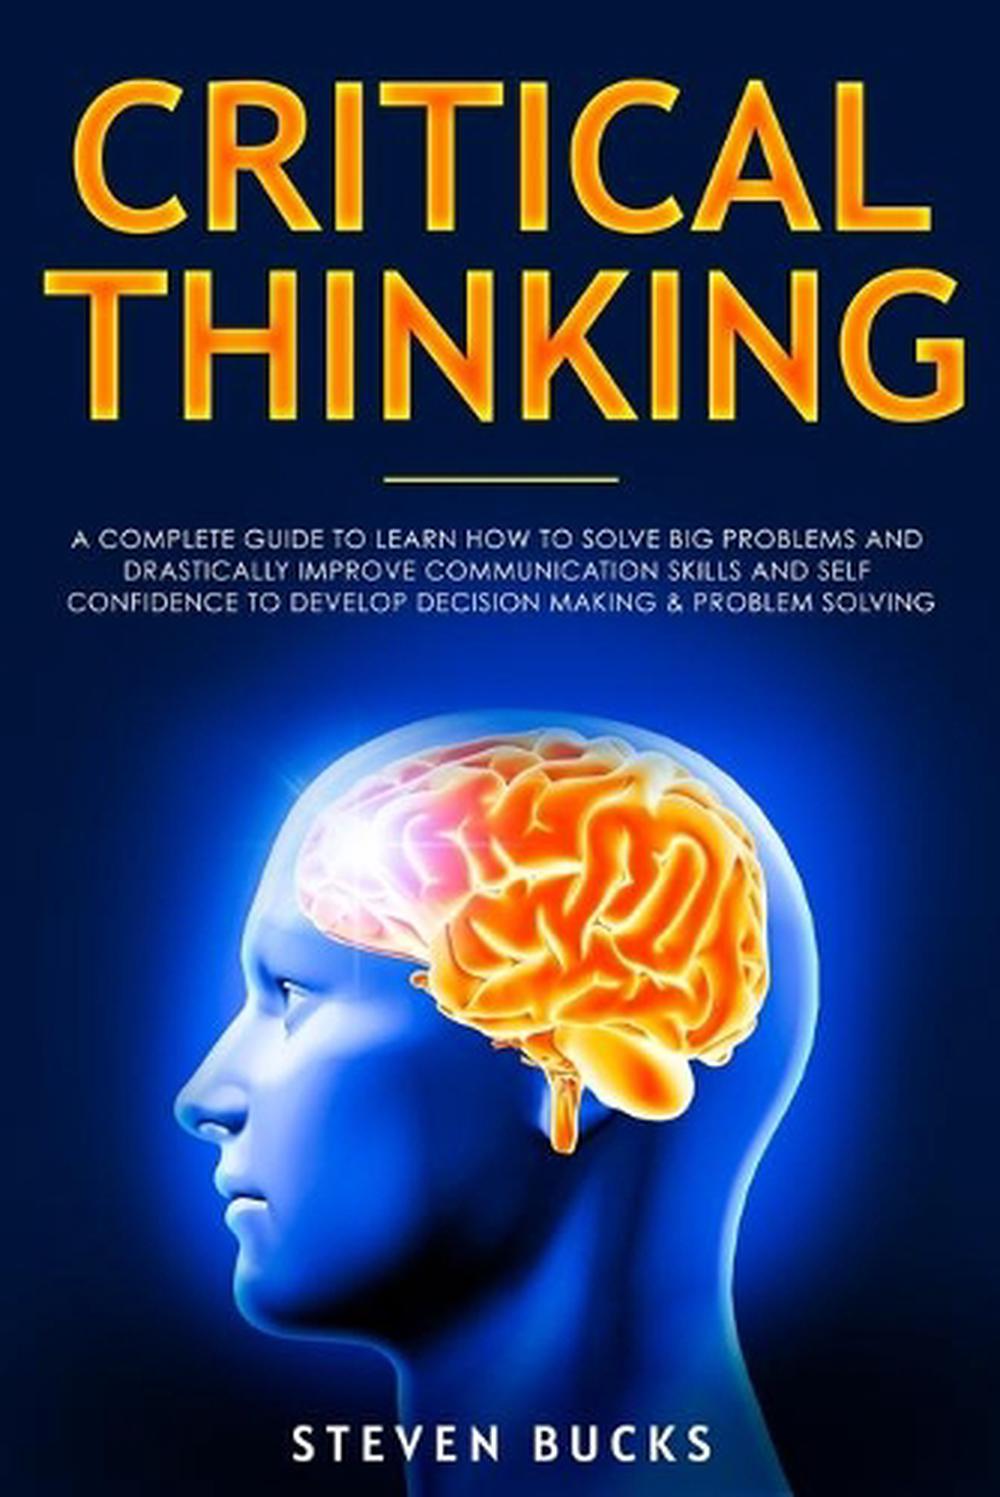 books to improve critical thinking reddit